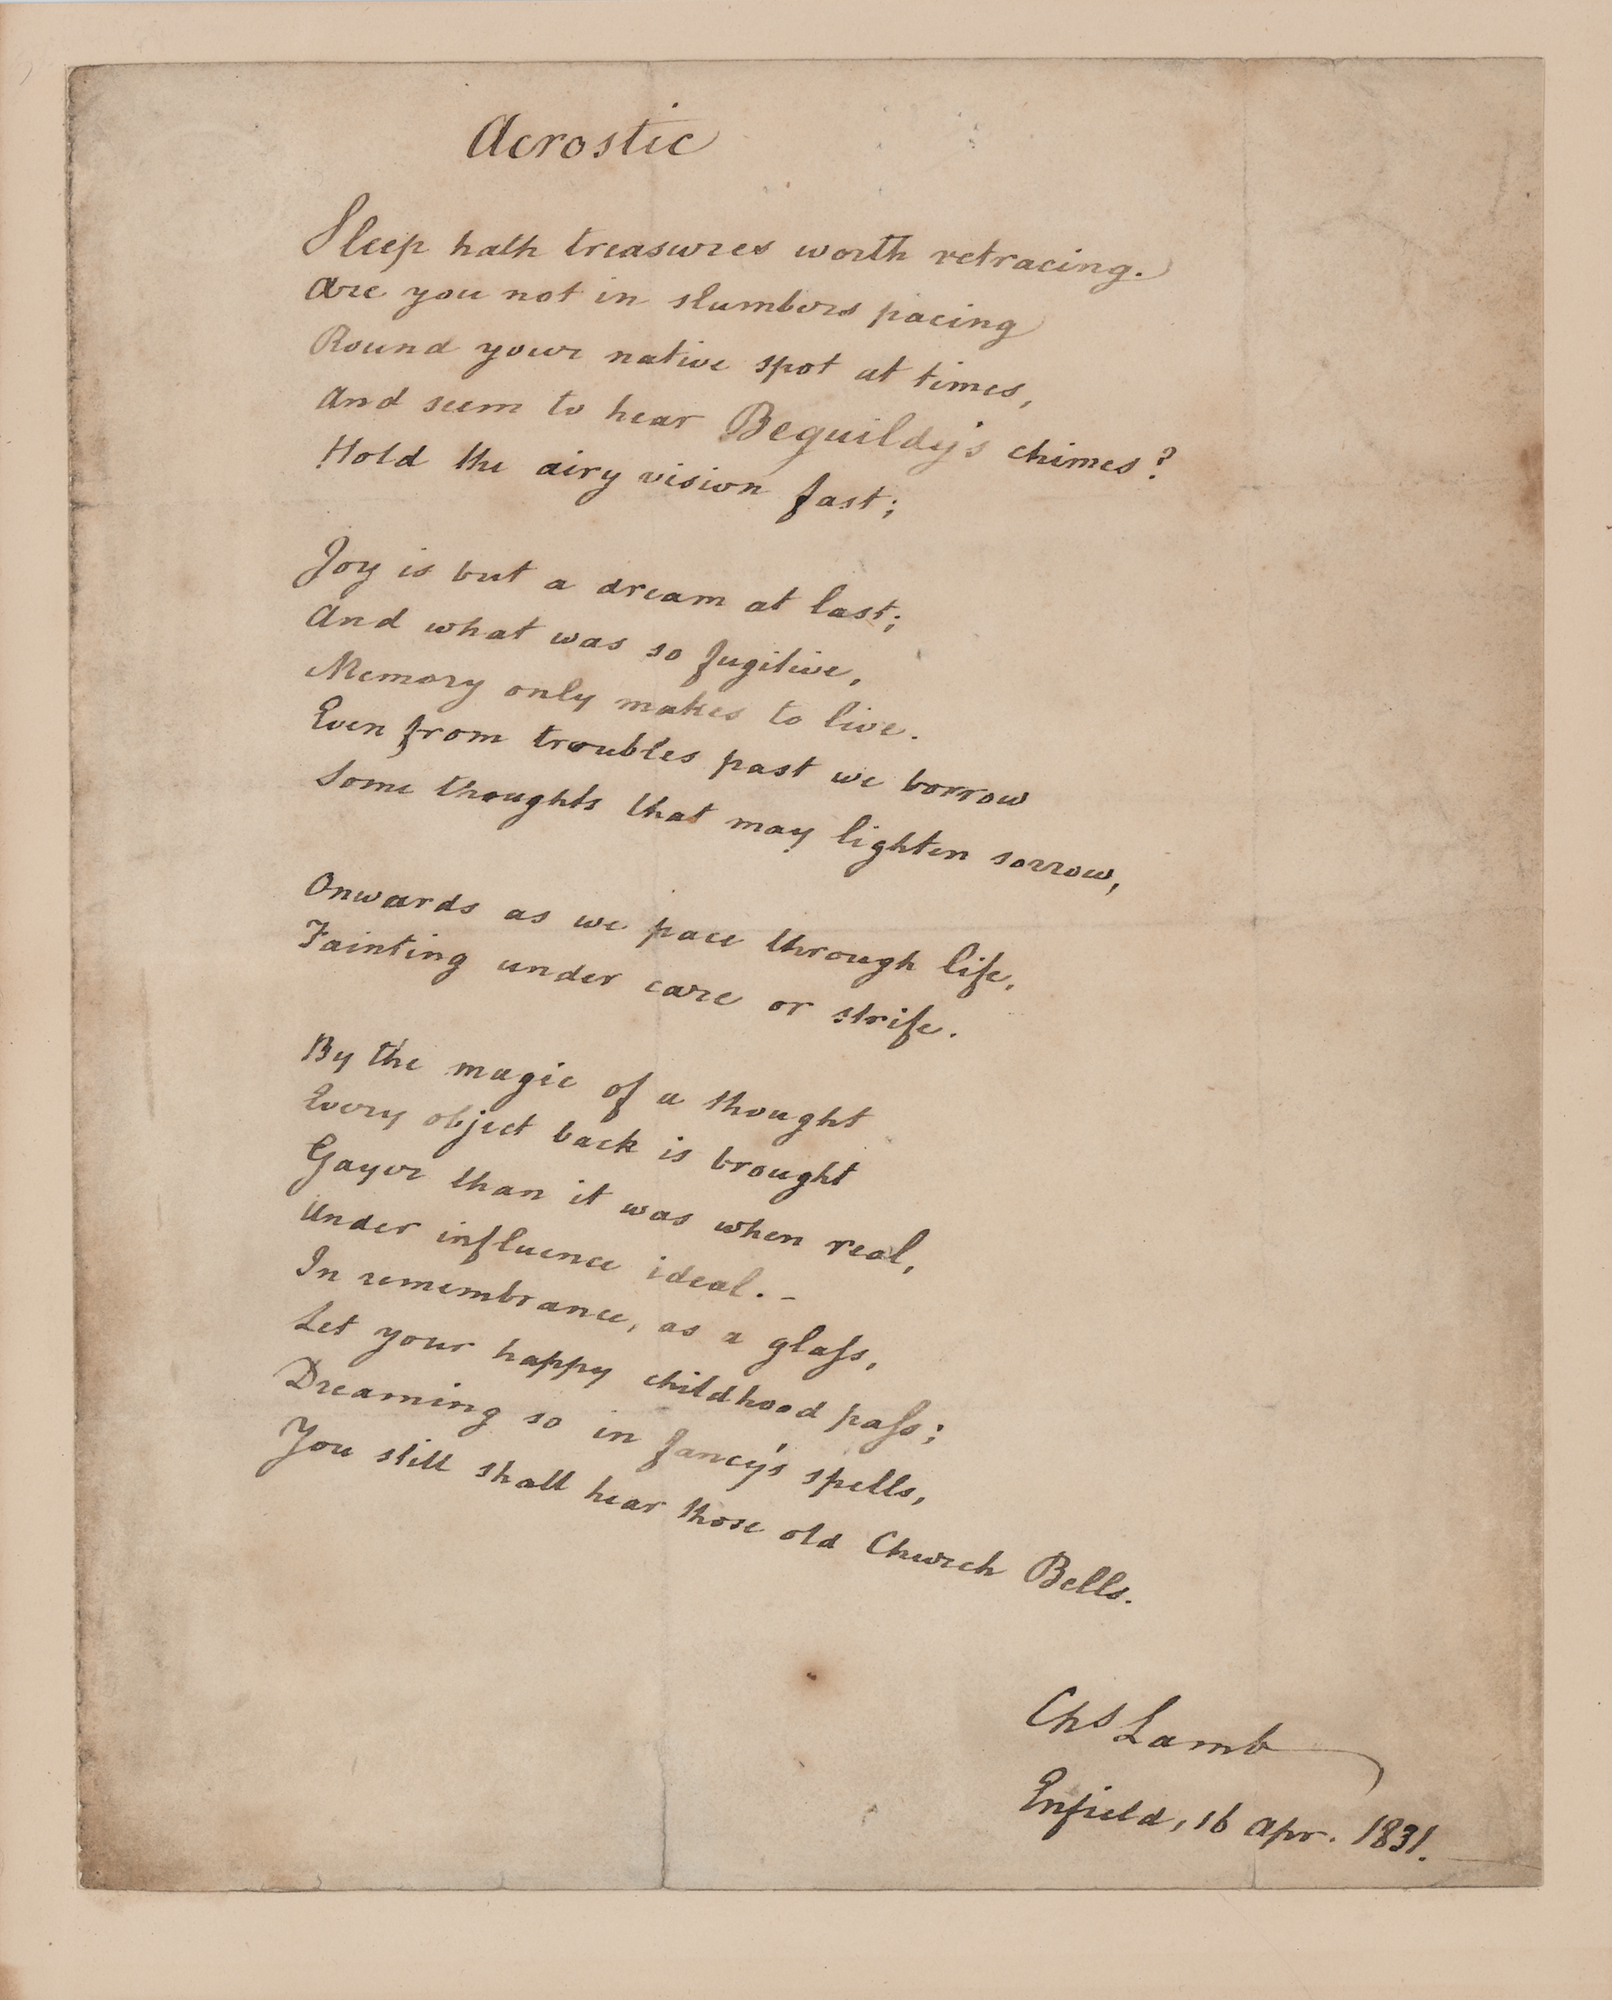 Lot #504 Charles Lamb Signed Handwritten Acrostic Poem